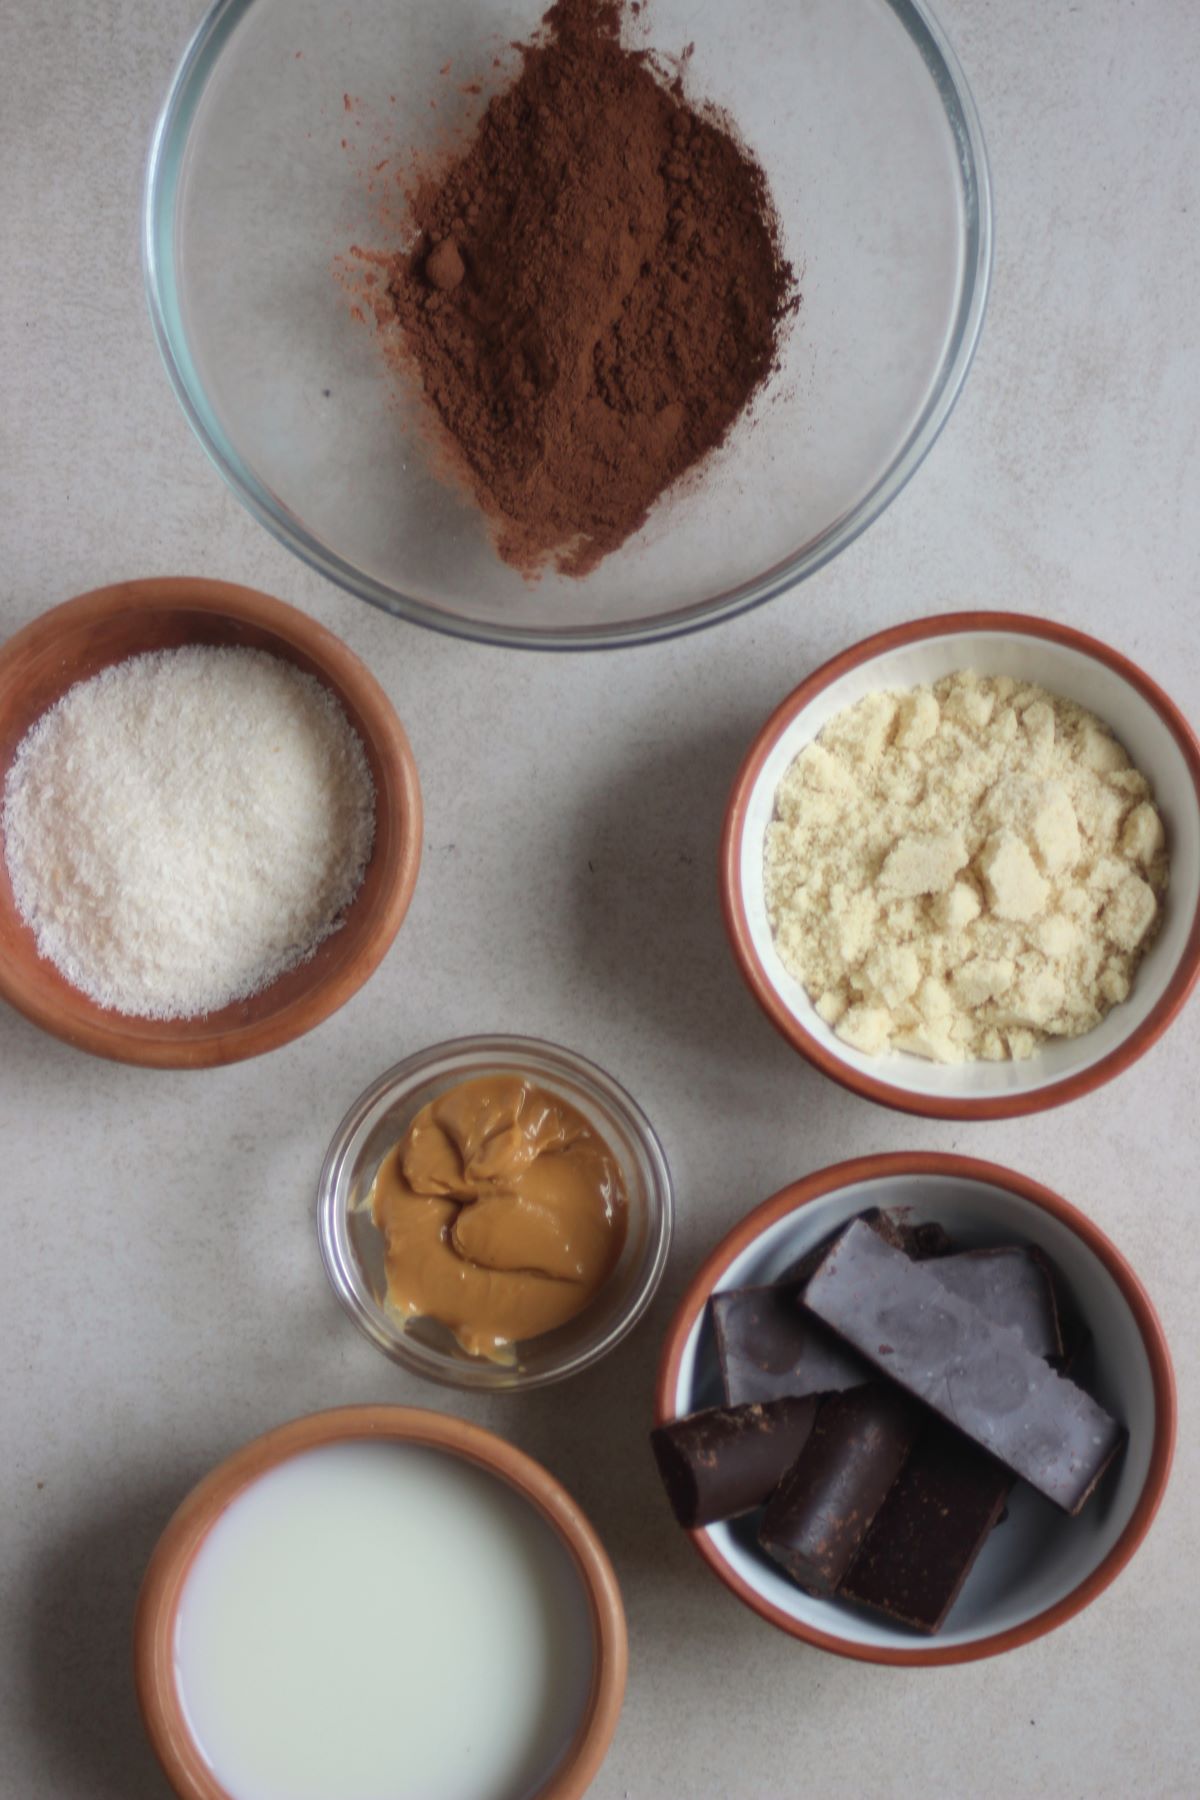 Chocolate peanut butter balls ingredients.